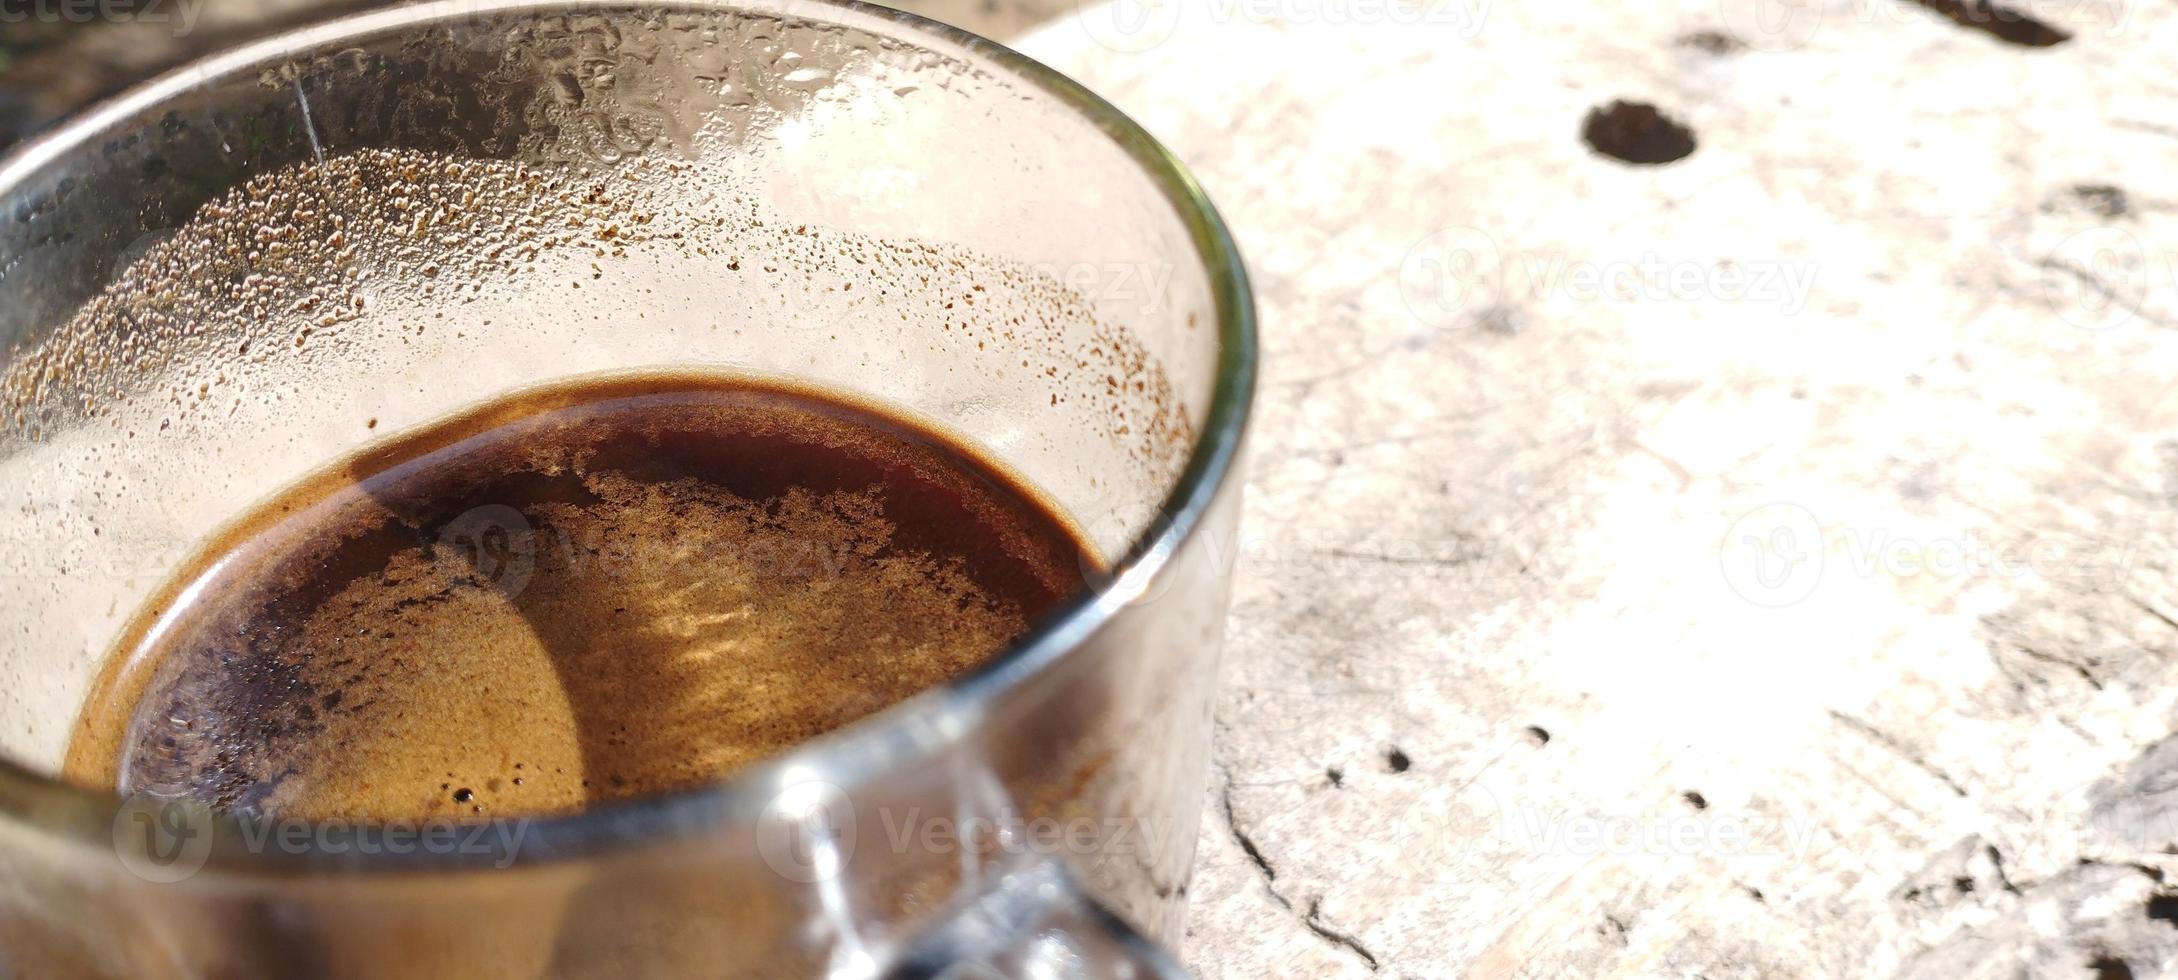 nyligen bryggt svart kaffe i en glas kopp foto